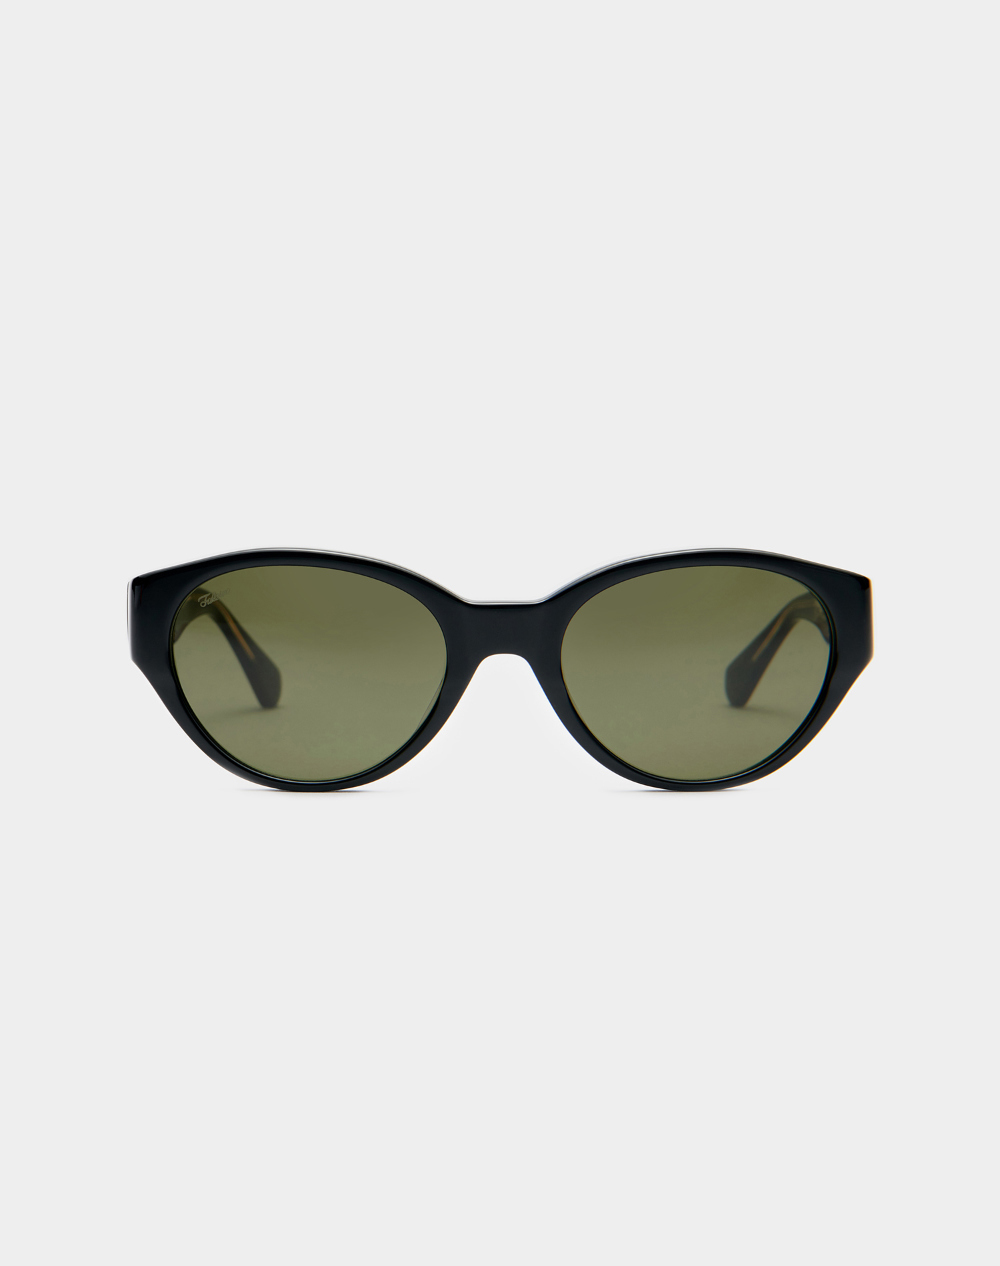 glasses khaki color image-S1L3